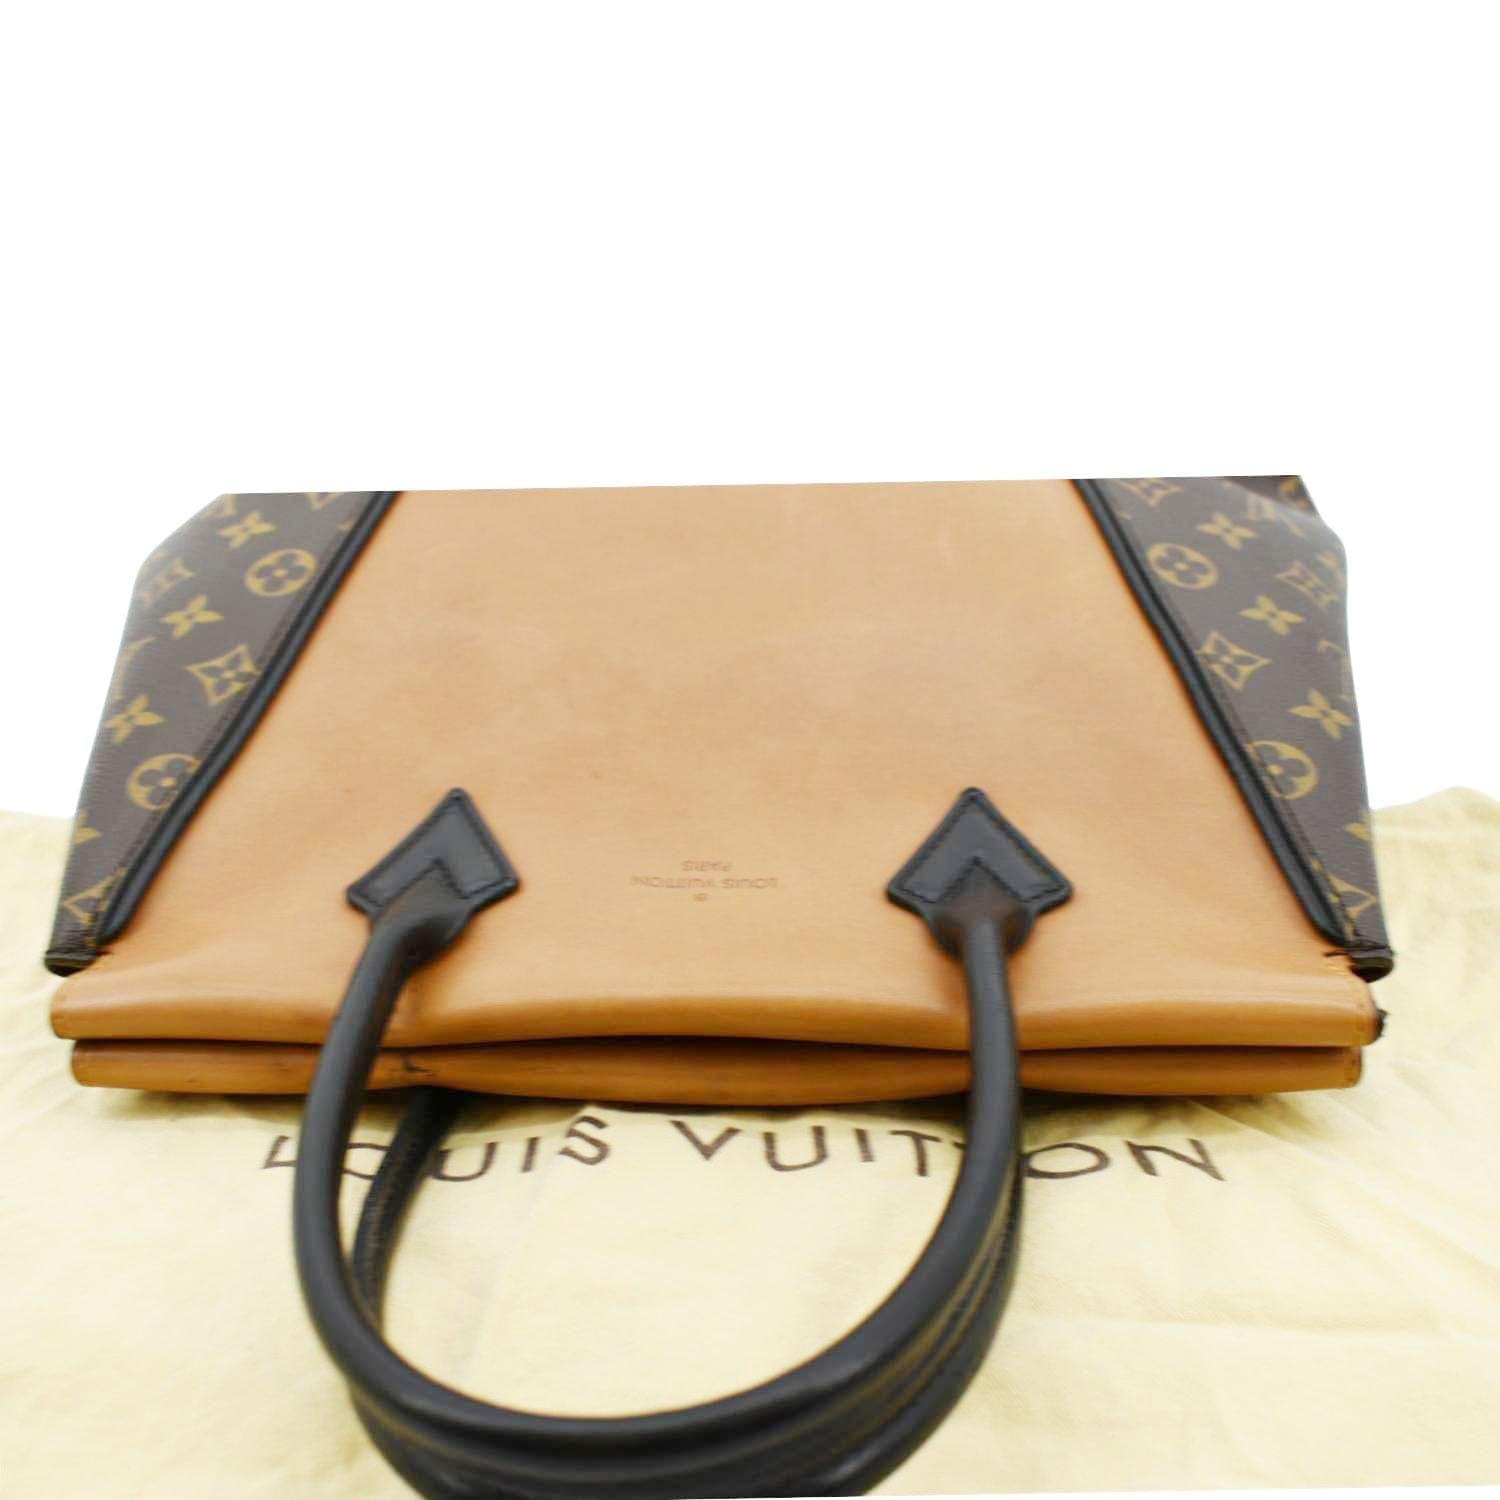 Louis Vuitton Tote W Handbag 339231